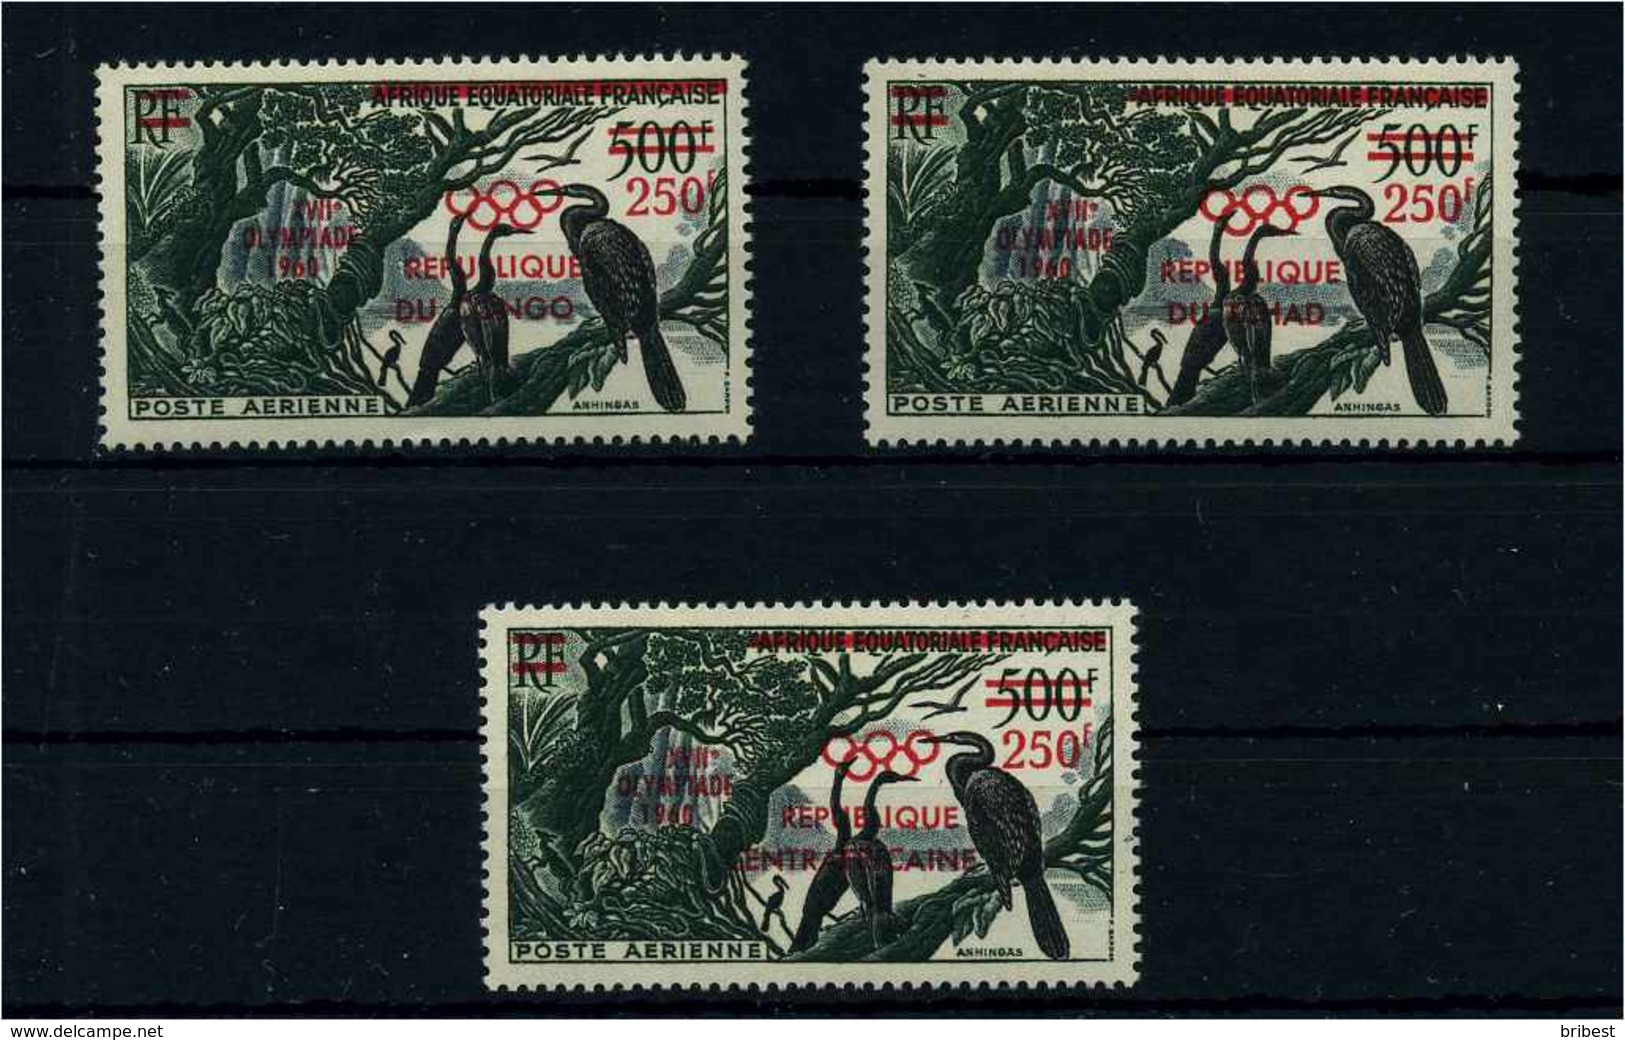 AFRIKA Lot Aus 1960 Postfrisch (105112) - Zentralafrik. Republik